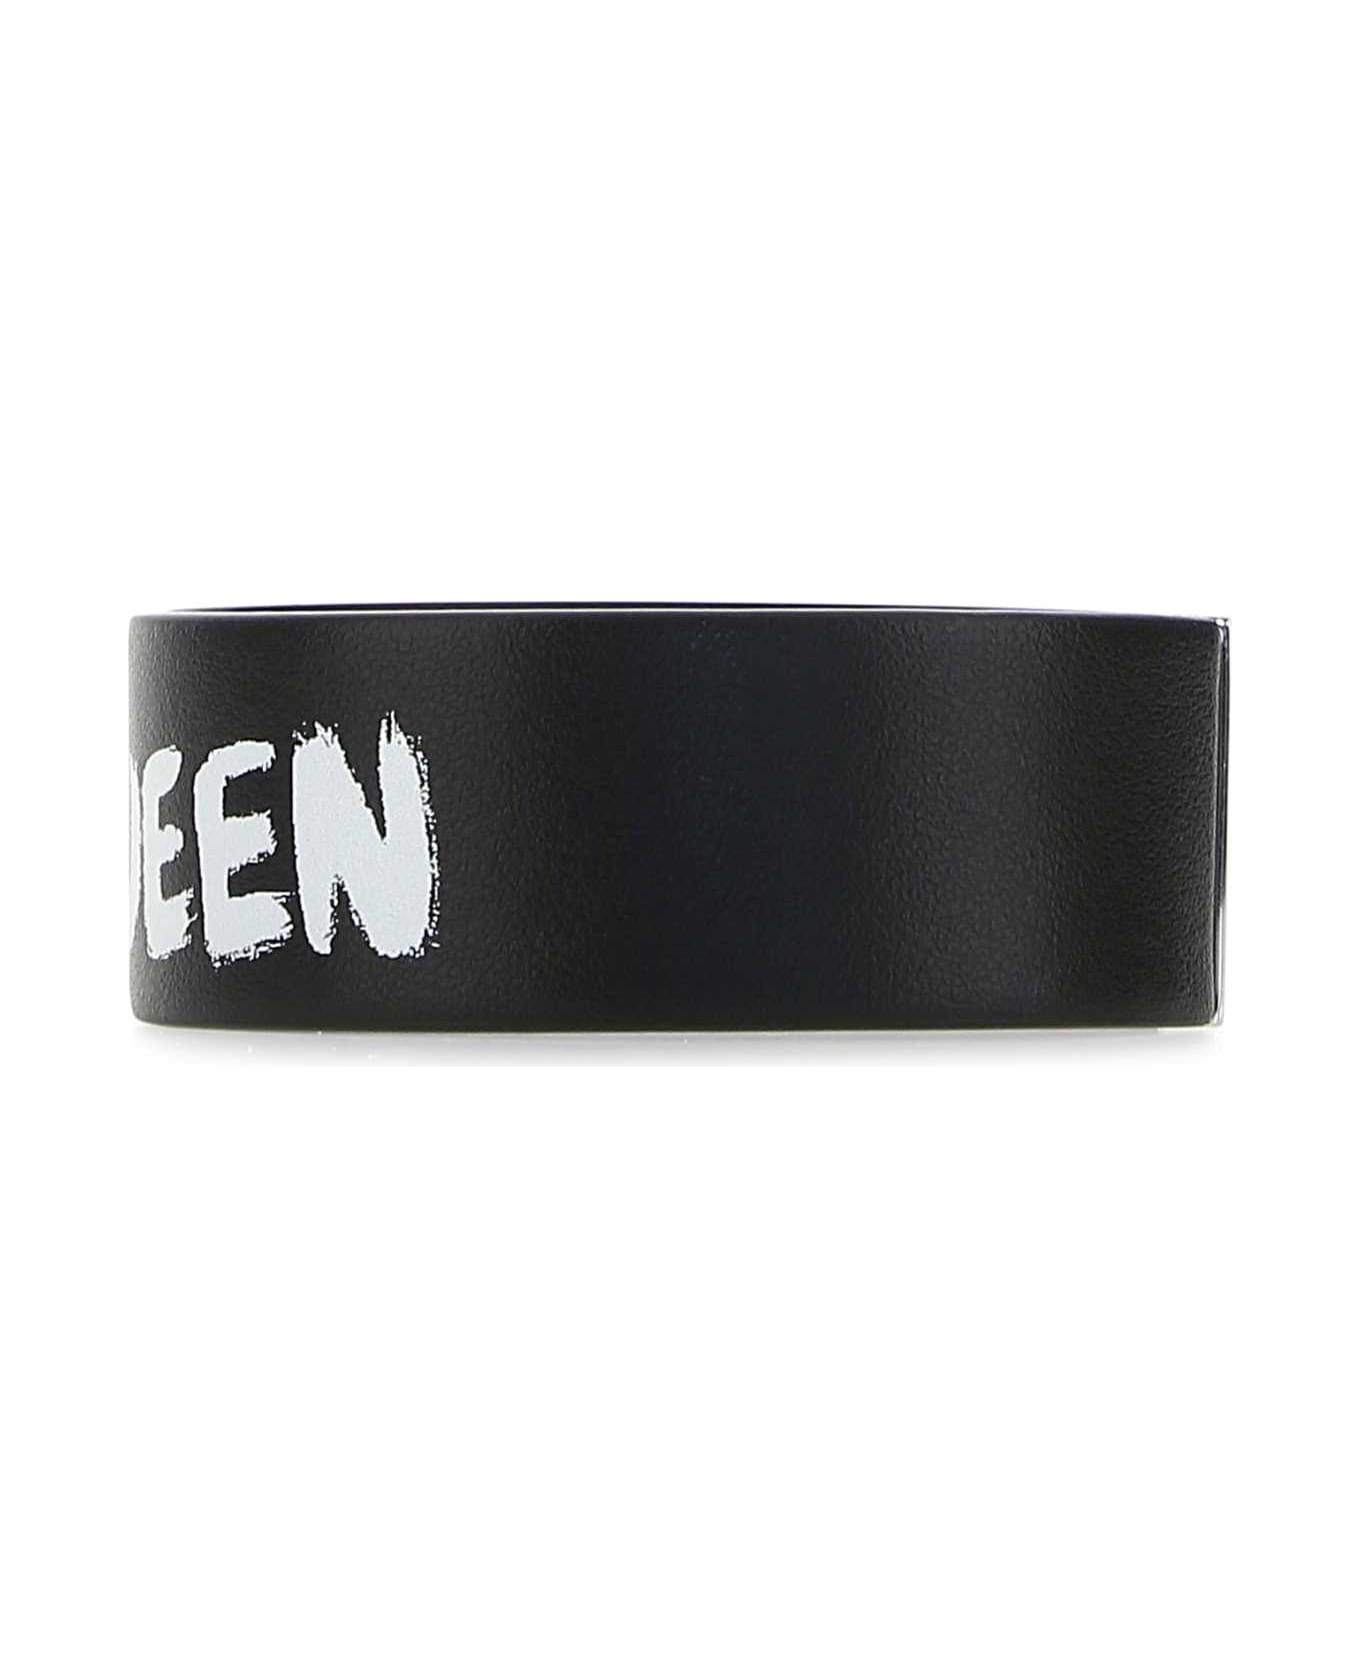 Alexander McQueen Black Leather Bracelet - 1070